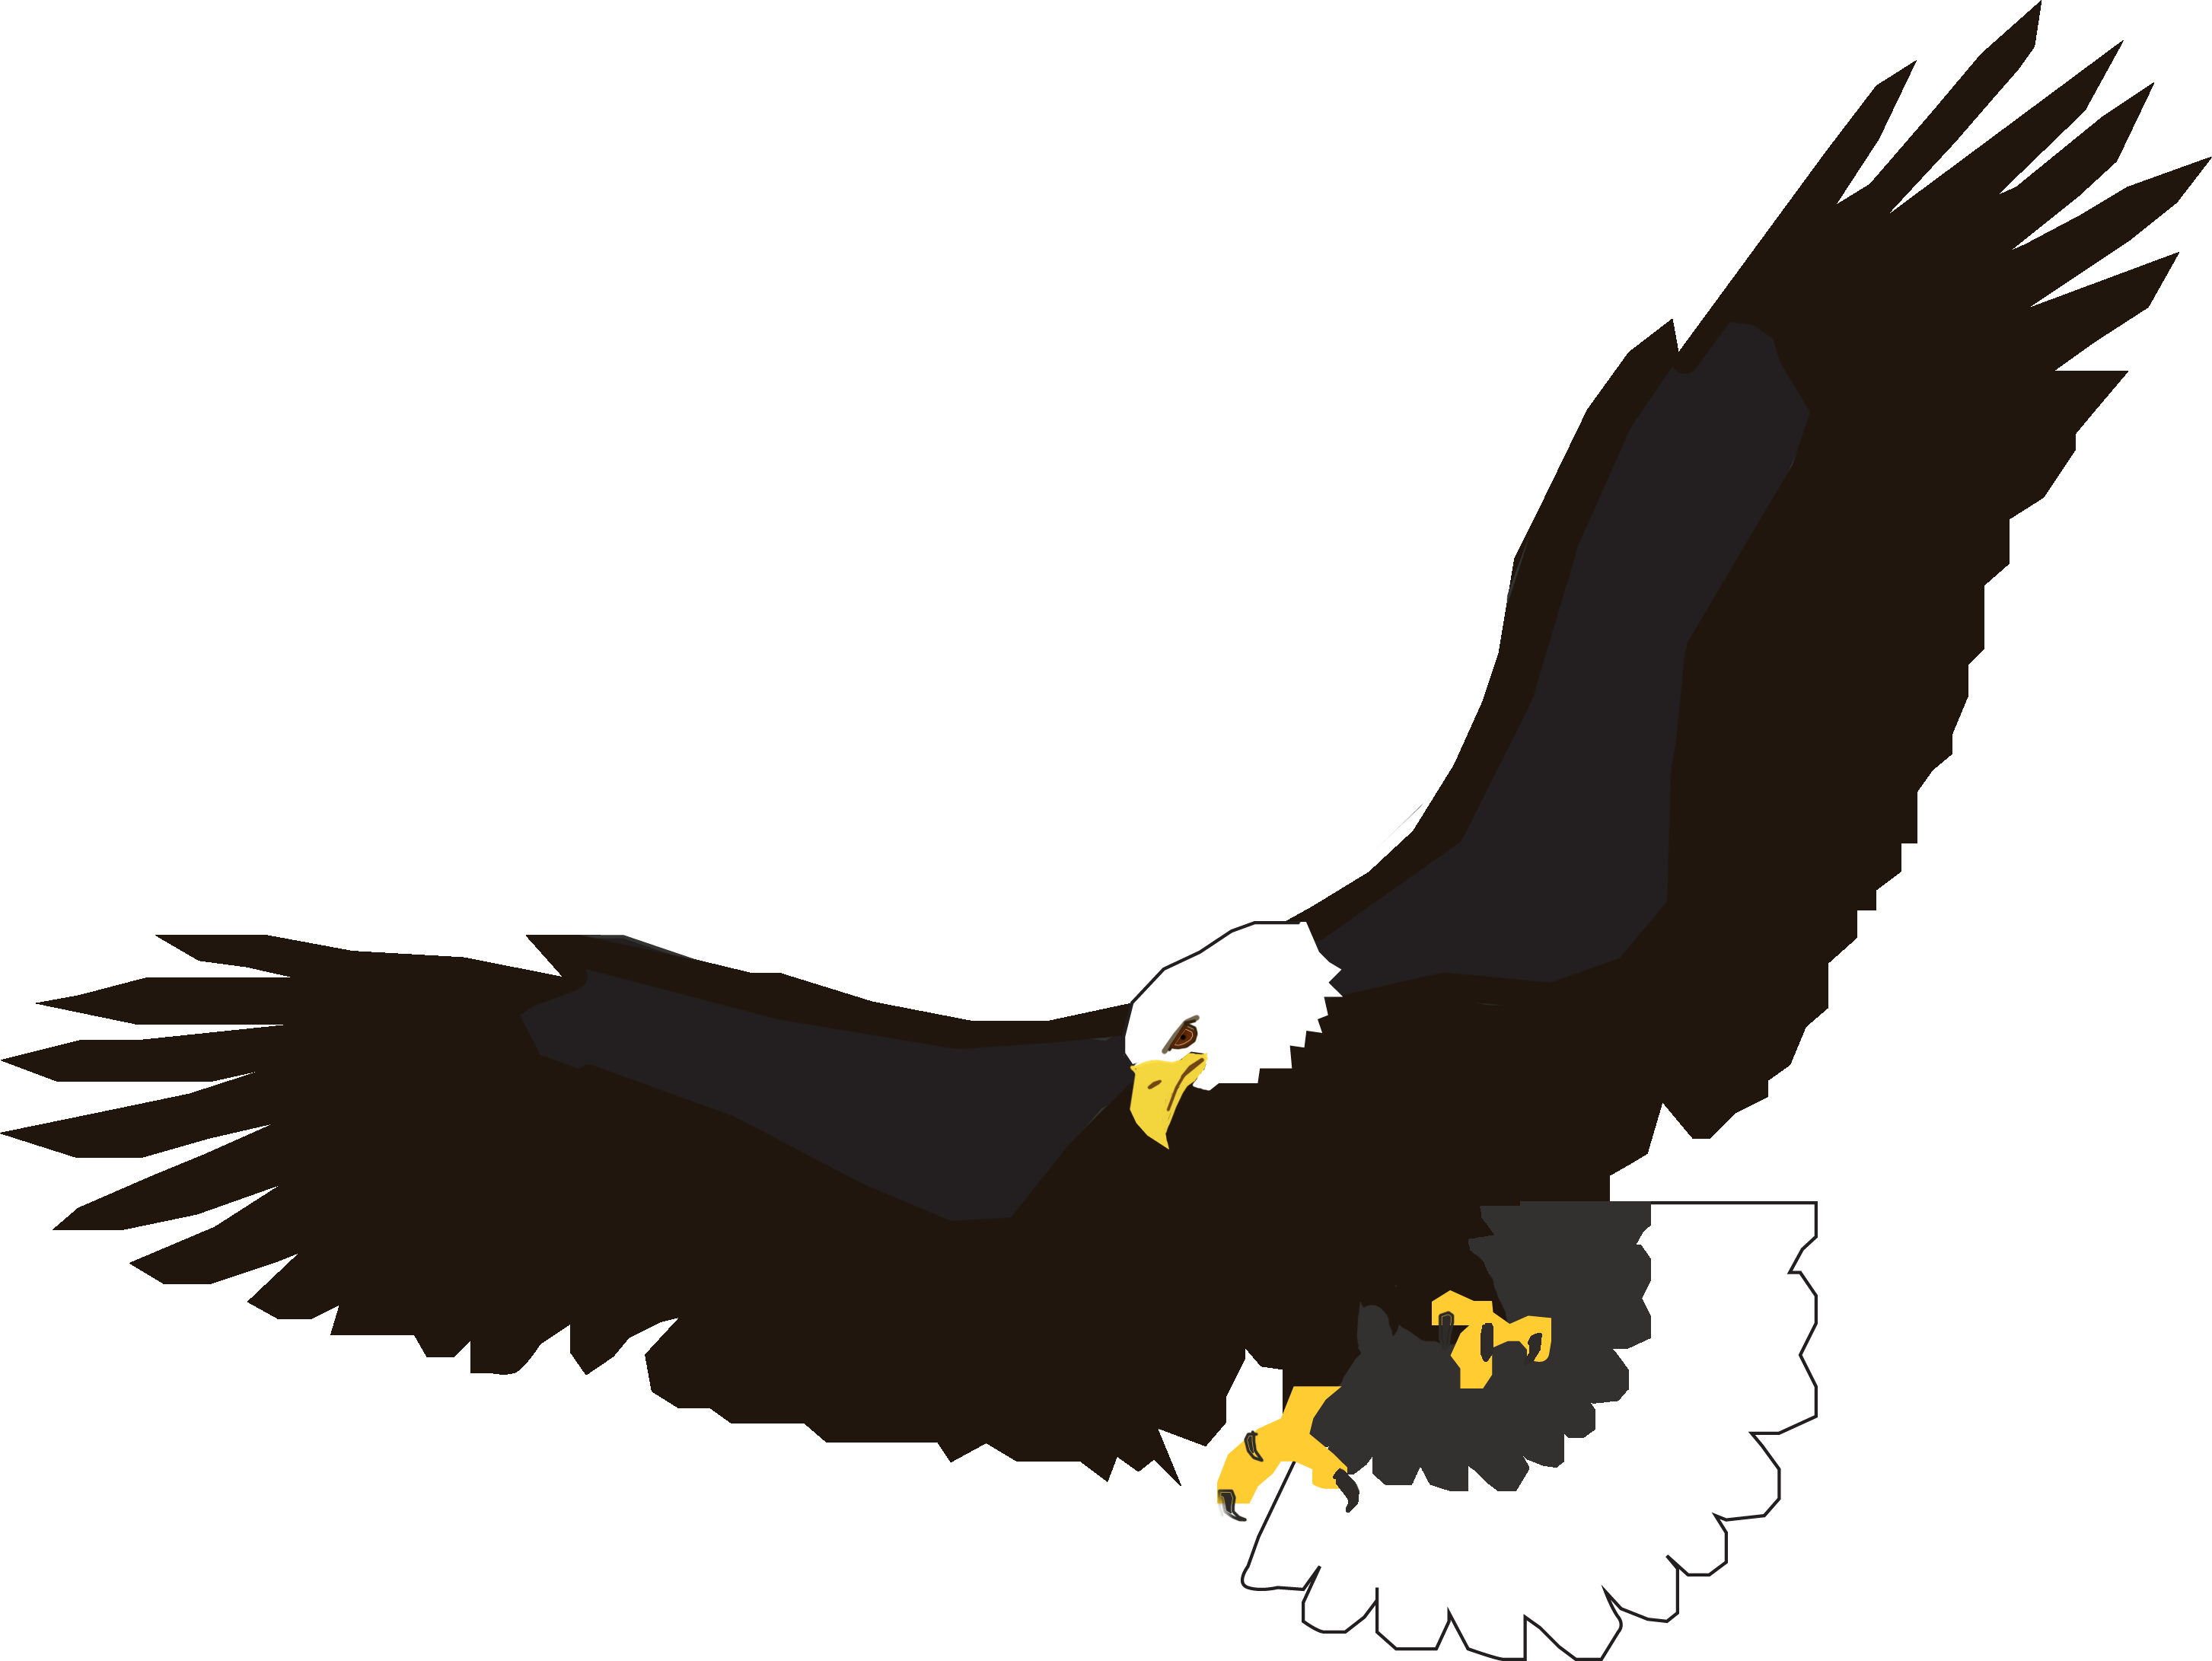 Flying Eagle Png Image Download Png Image - Eagle, Transparent background PNG HD thumbnail